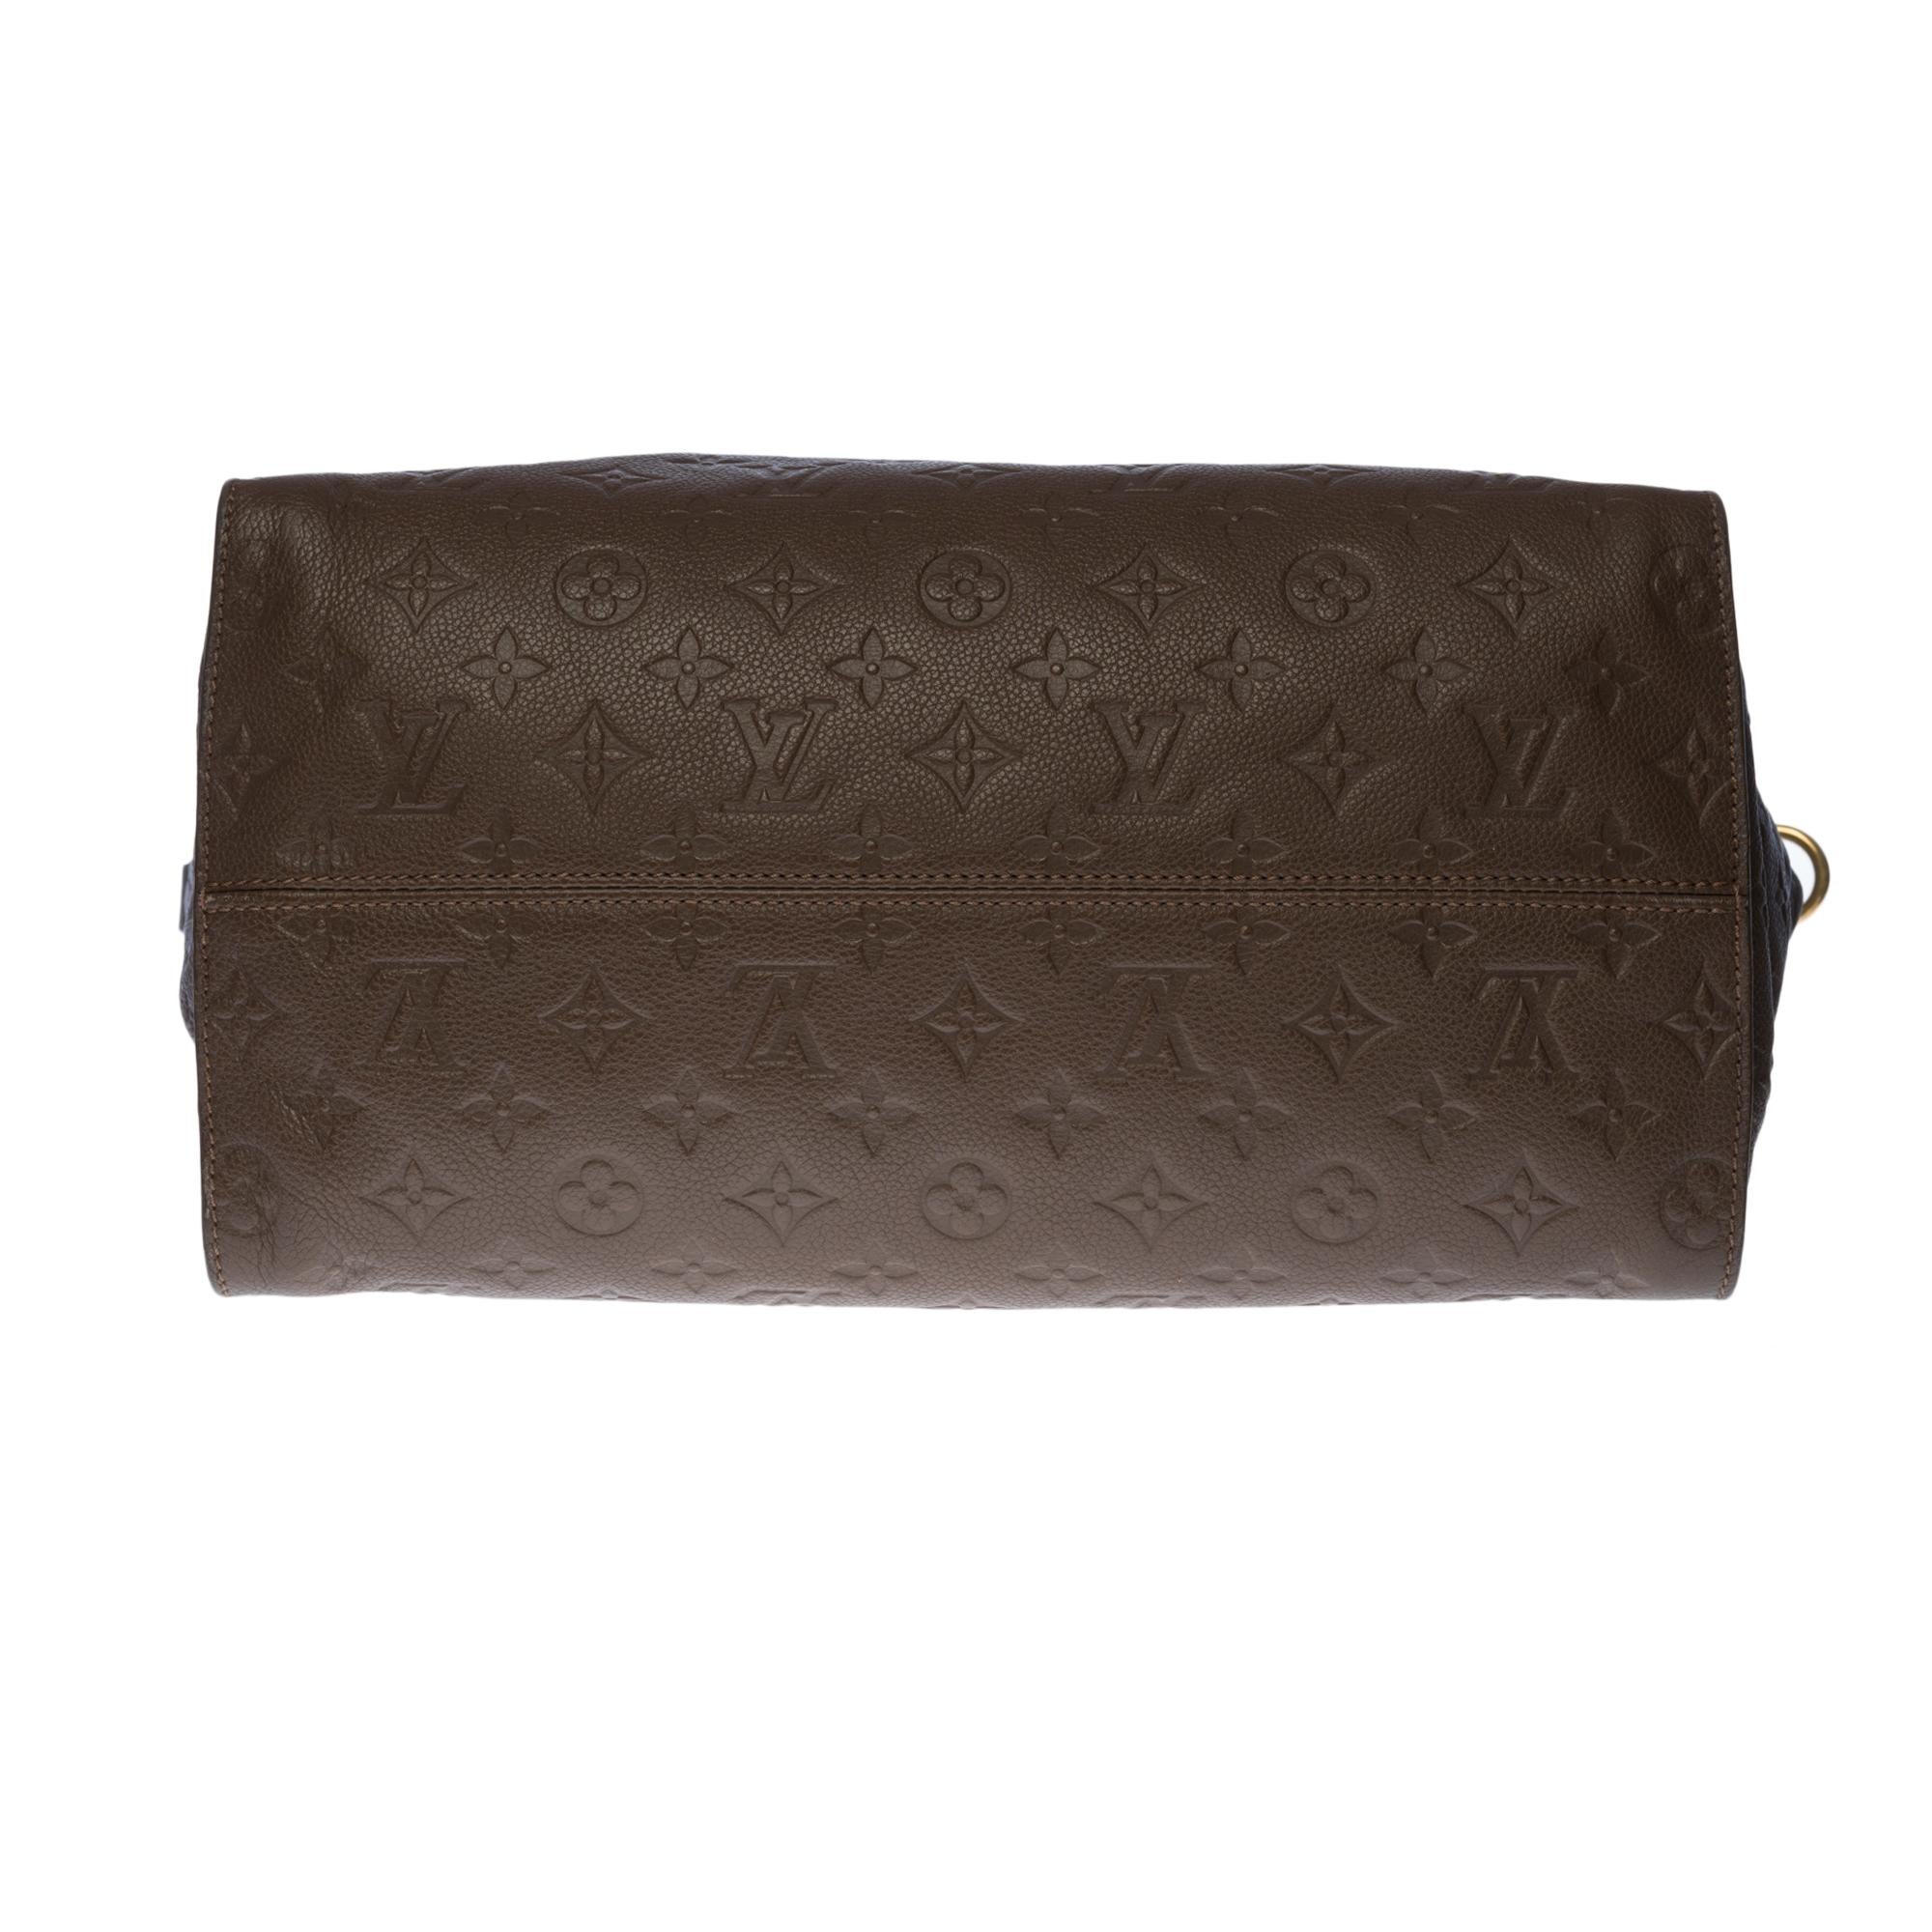 Louis Vuitton Lumineuse Shoulder bag in brown empreinte leather, GHW 4